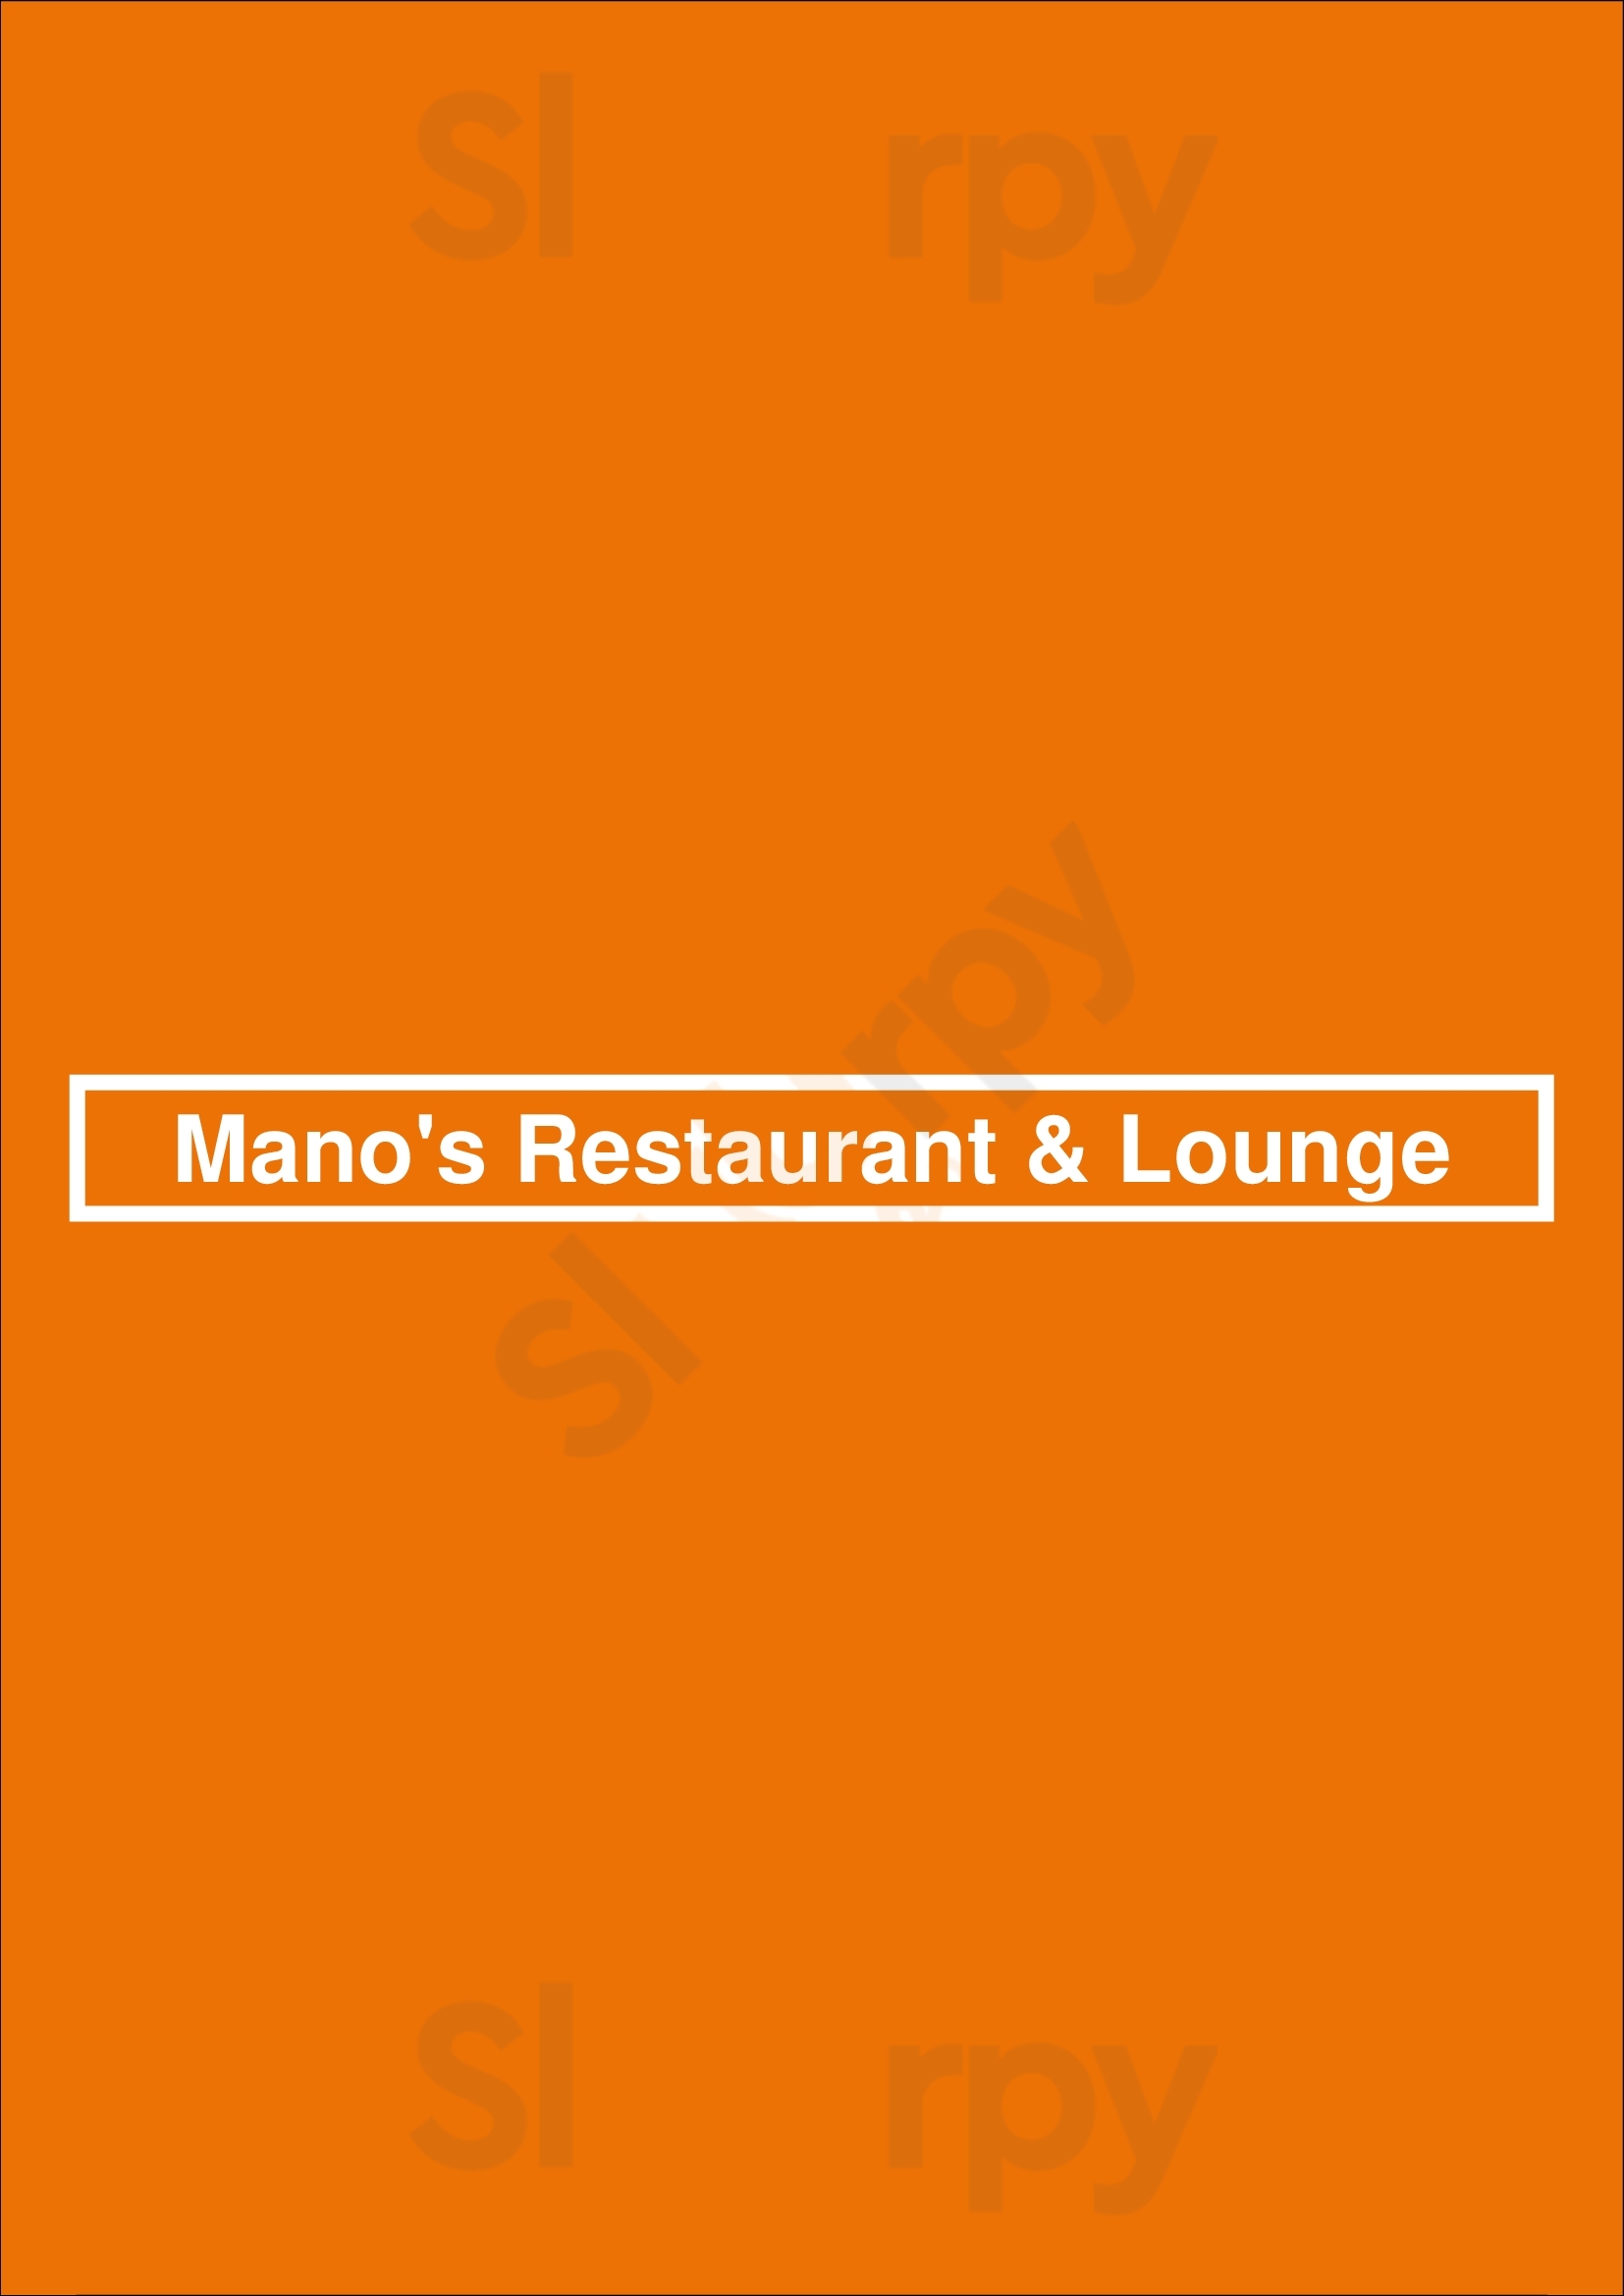 Mano's Restaurant & Lounge Saskatoon Menu - 1